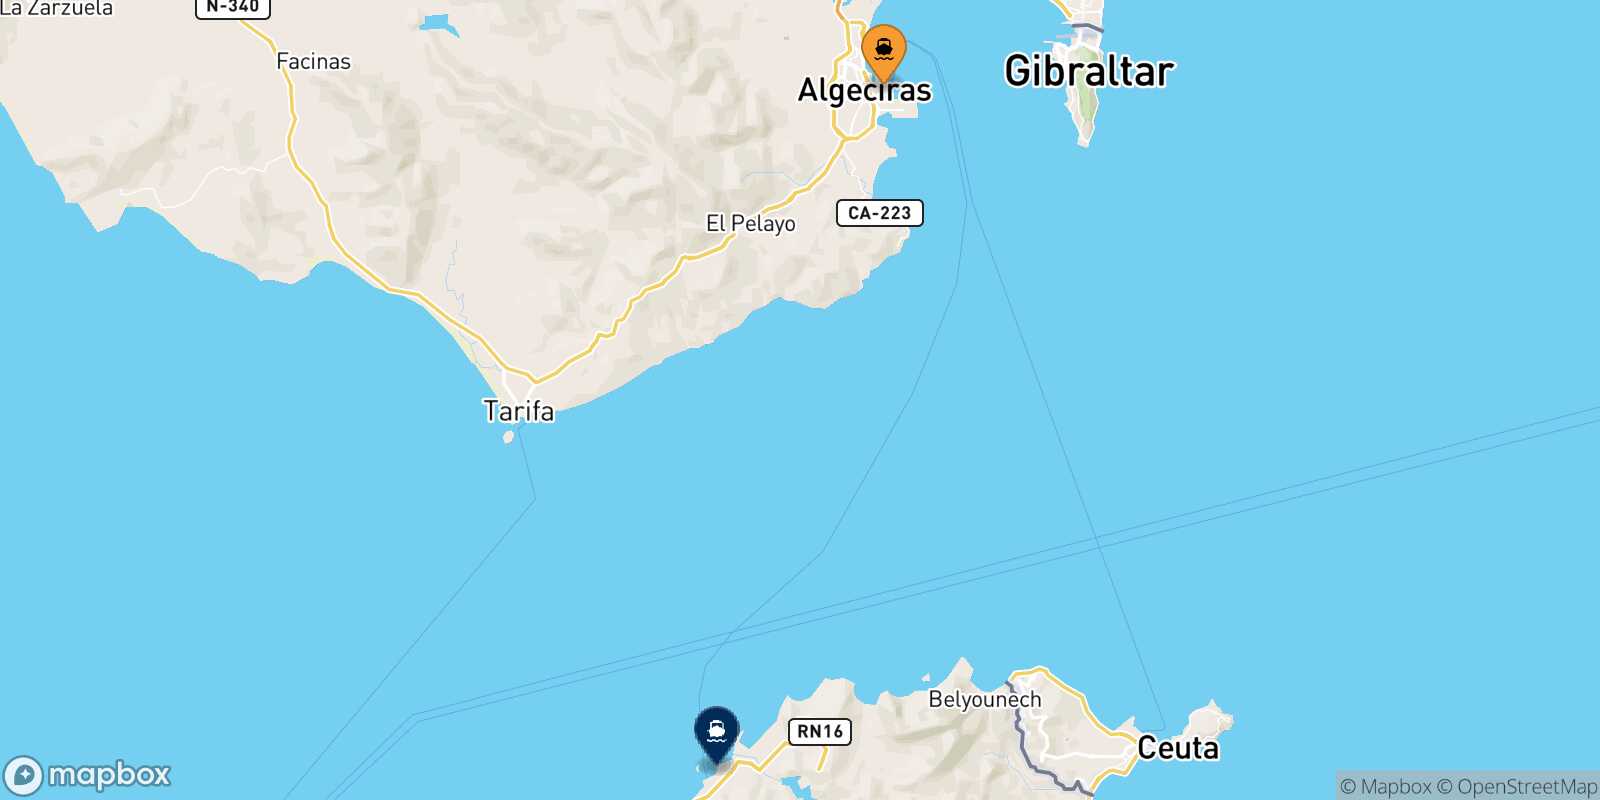 Mappa della rotta Algeciras Tangeri Med